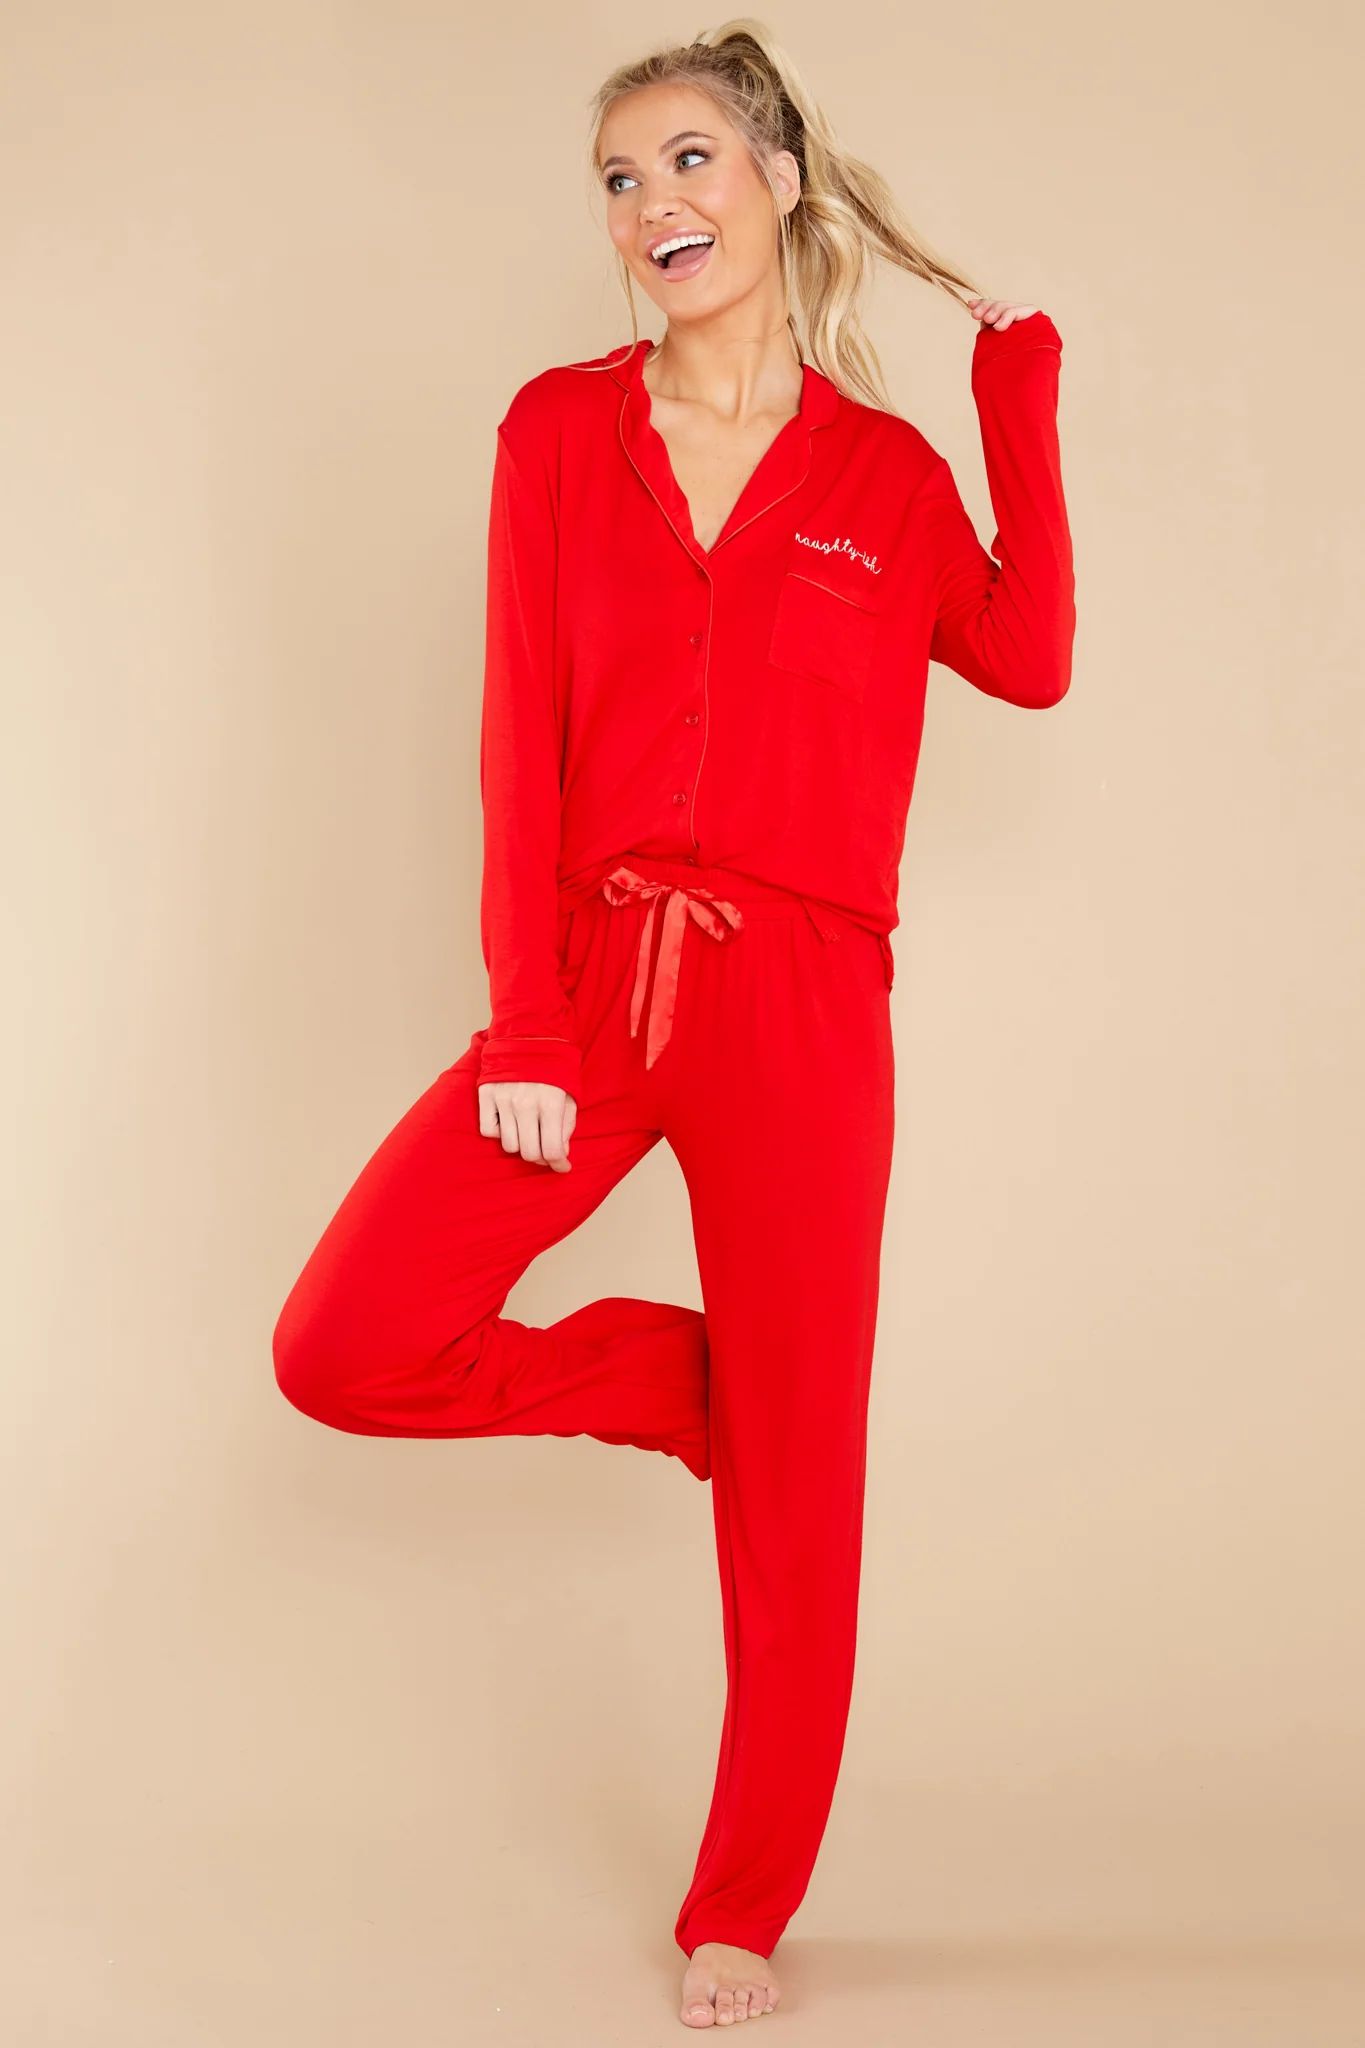 Naughty-ish Red Pajama Top | Red Dress 